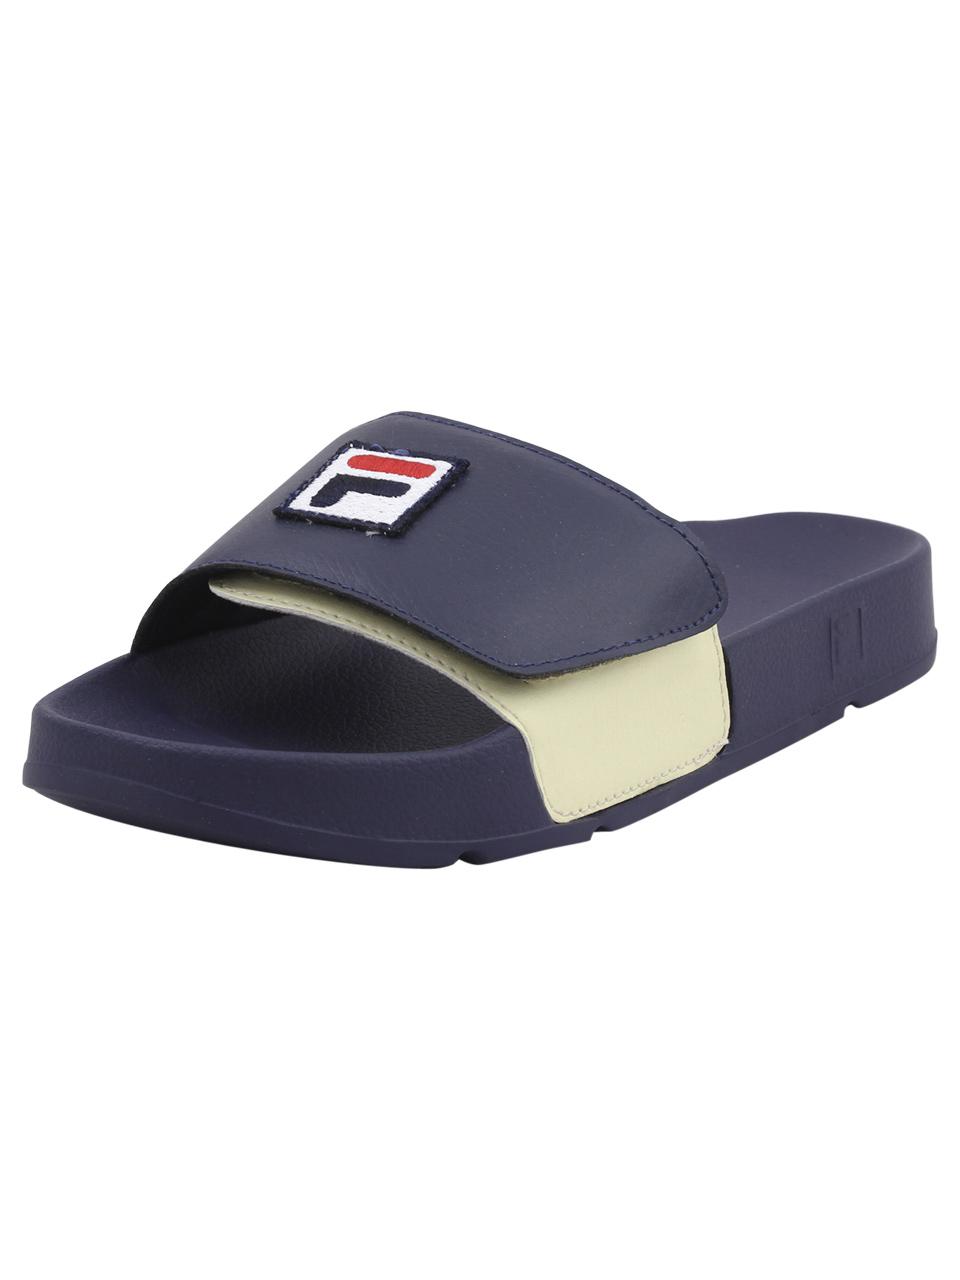 Fila Men's Drifter Strap Slides Sandals Shoes - Fila Navy/Fila Red/Fila Cream - 12 D(M) US